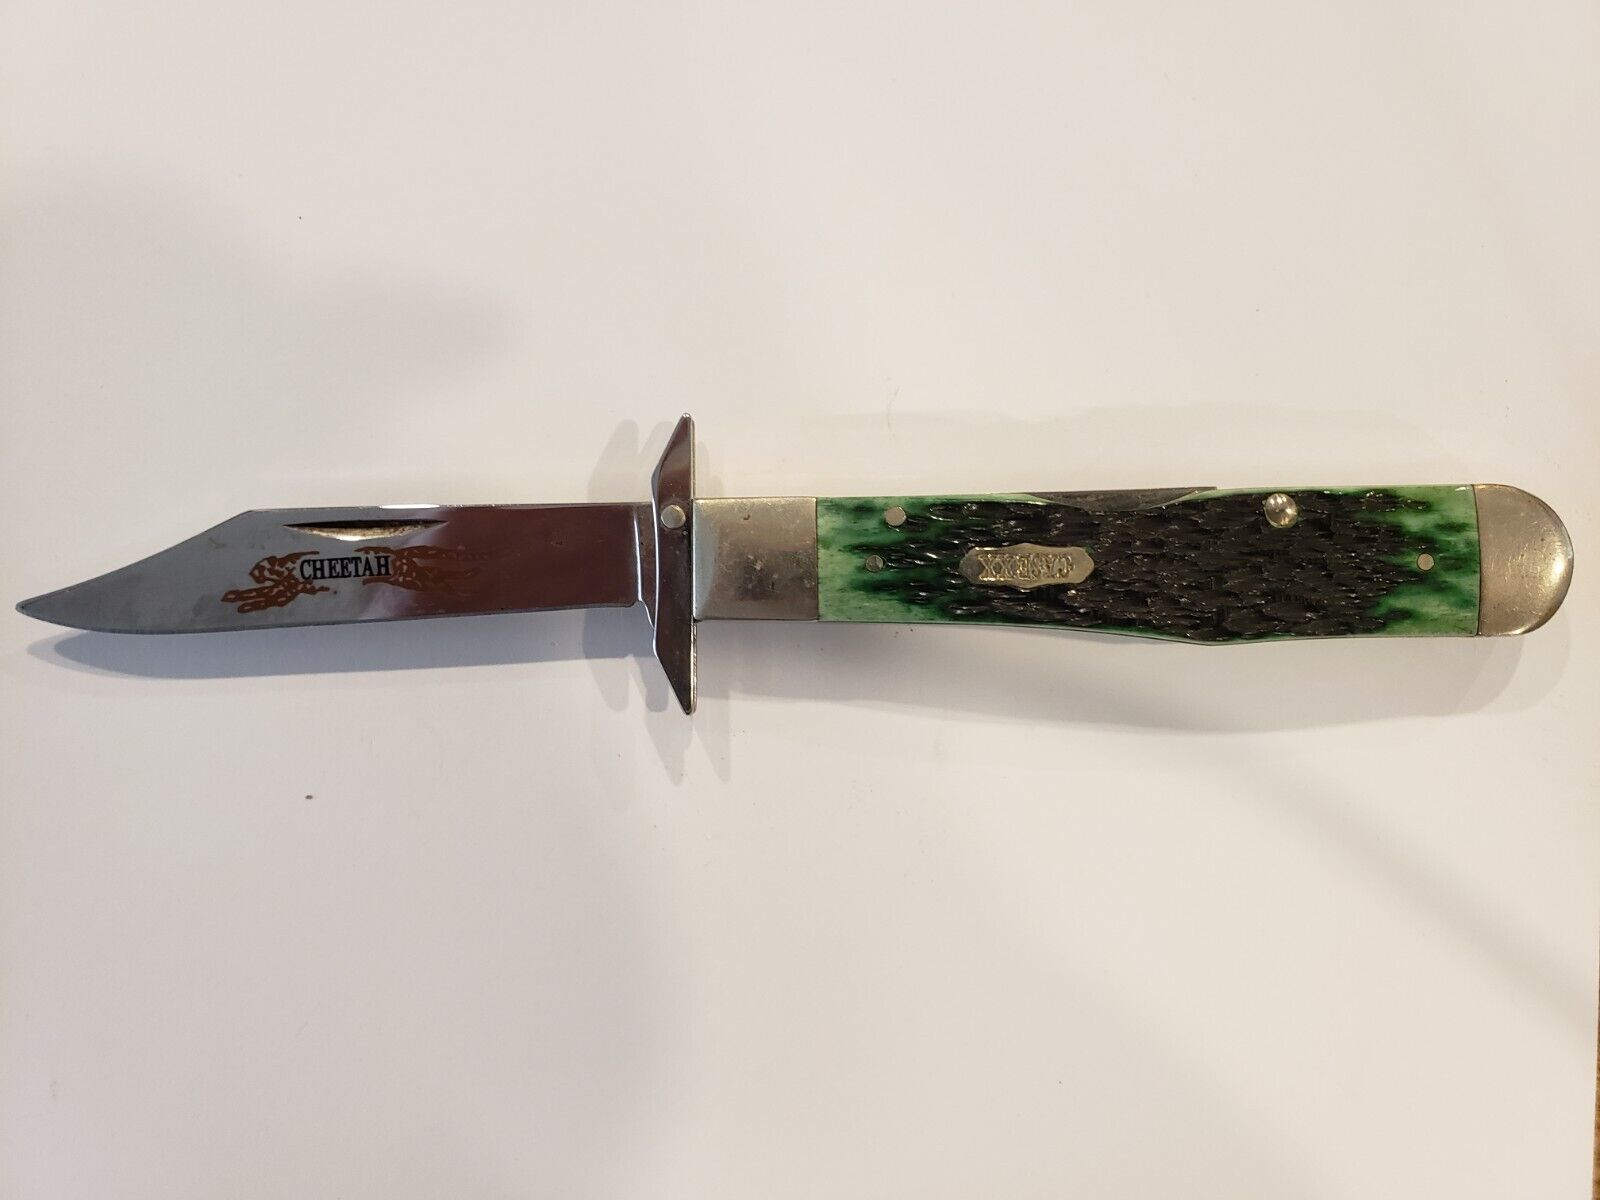 HOTKEY KNIFE SALE CASE 6111 1/2 L GREEN